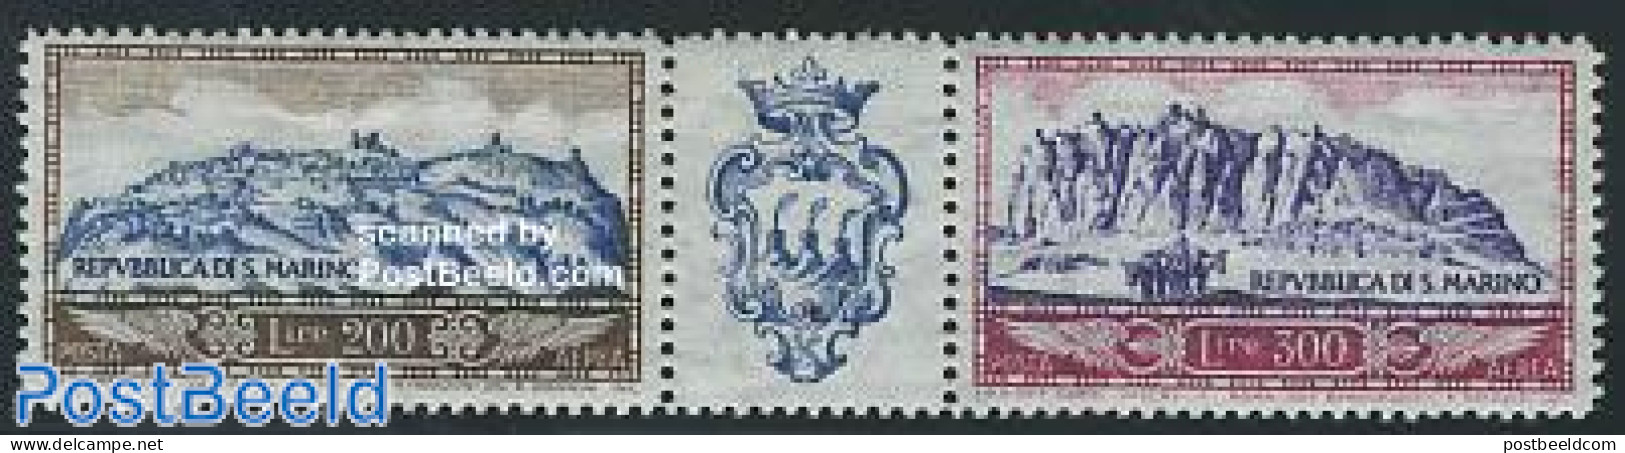 San Marino 1958 Airmail 2v+tab [:T:], Mint NH - Ongebruikt